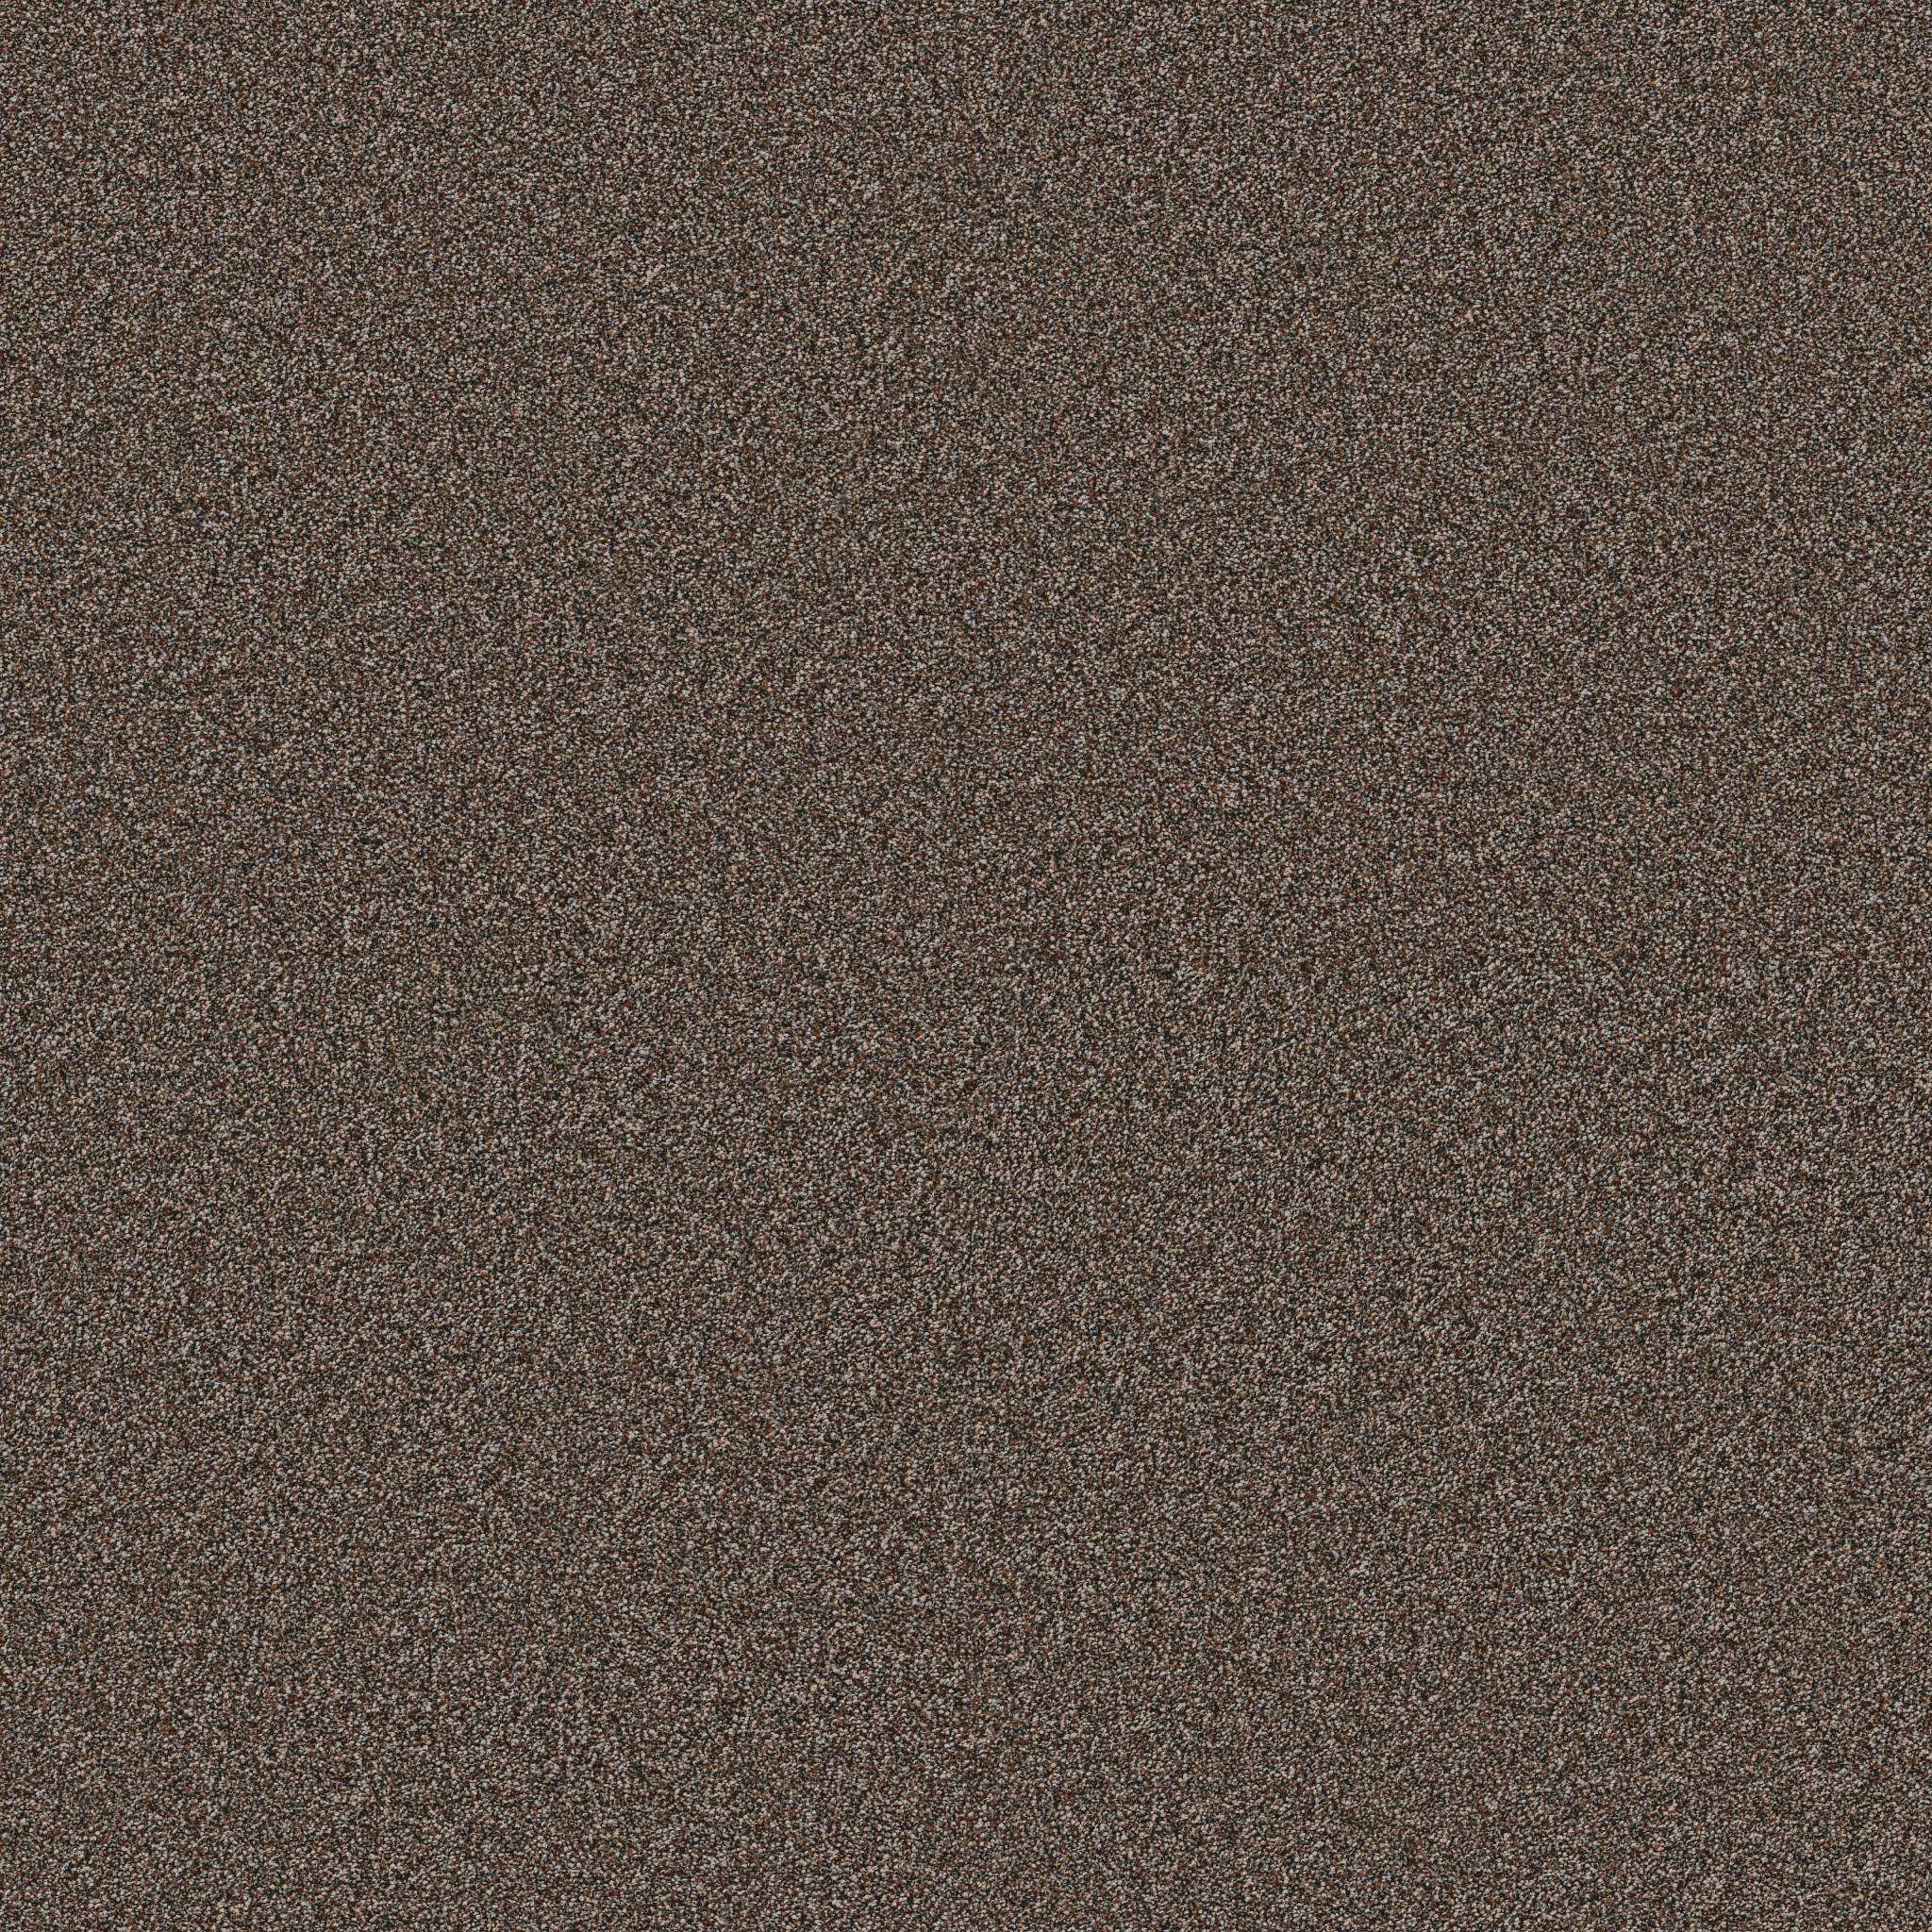 Kaleidoscope Carpet - Earthen Brick Zoomed Swatch Image